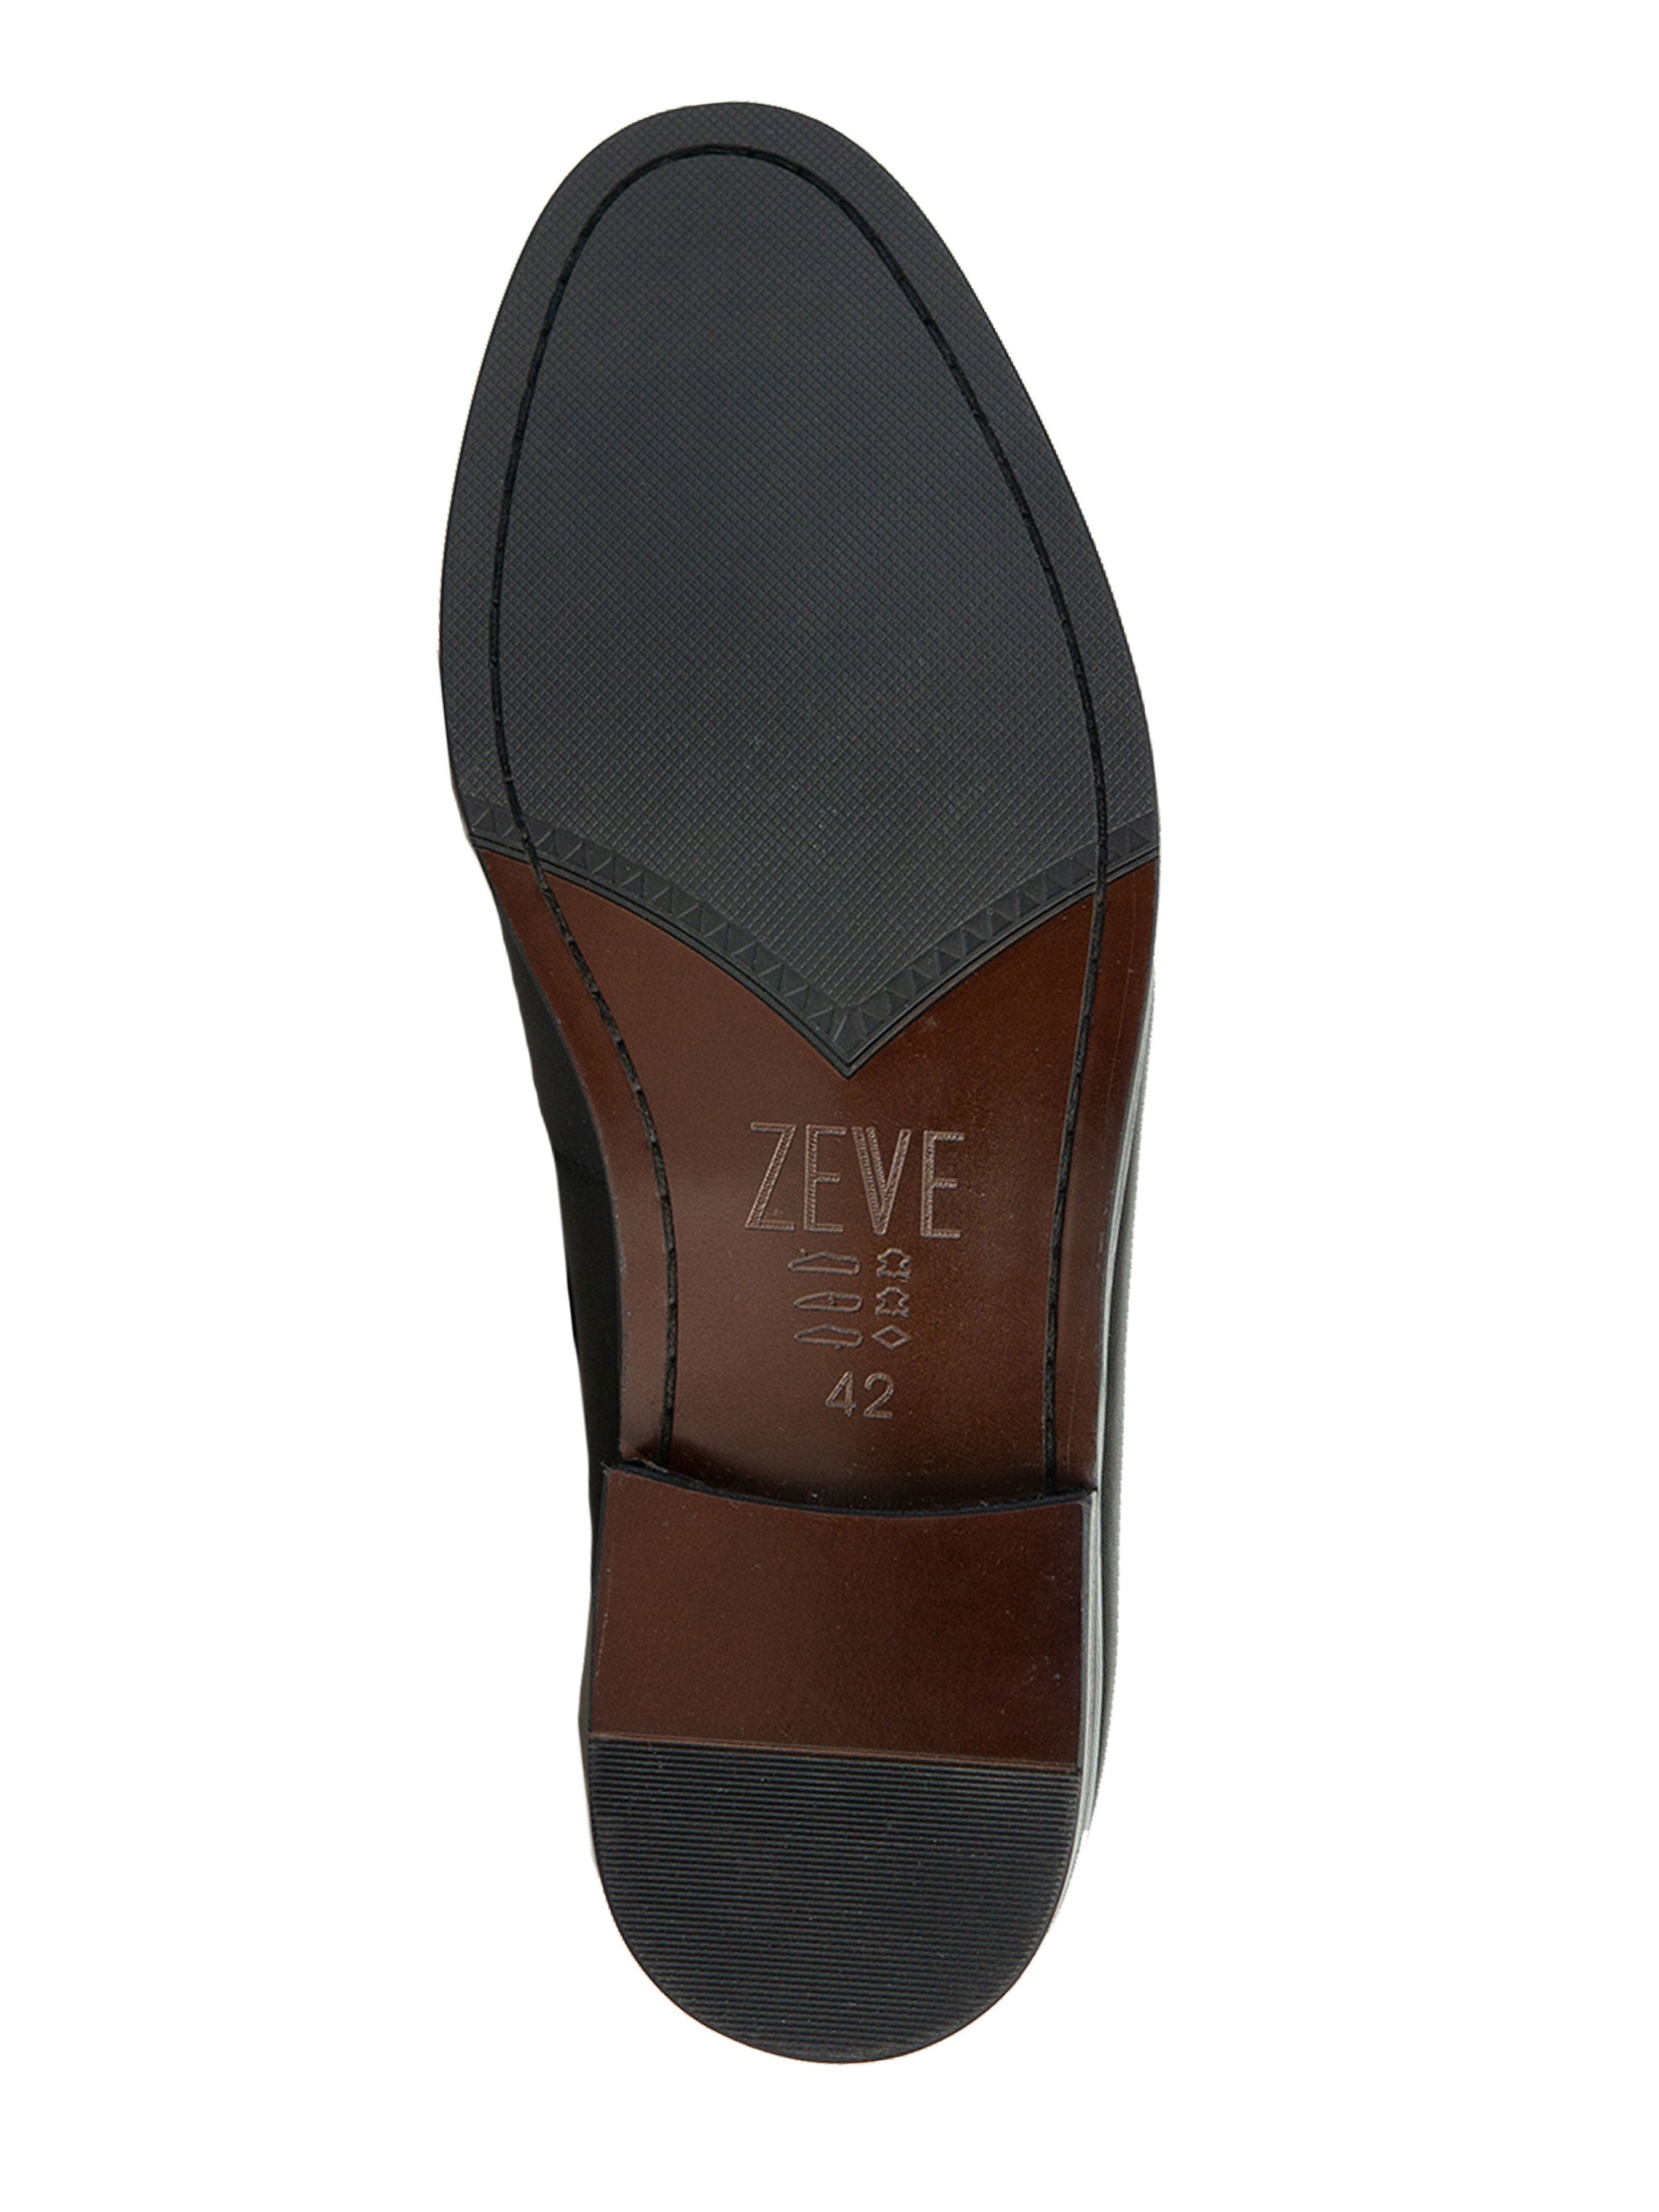 Horsebit Moccasin Loafer - Cognac Tan (Hand Painted Patina) - Zeve Shoes